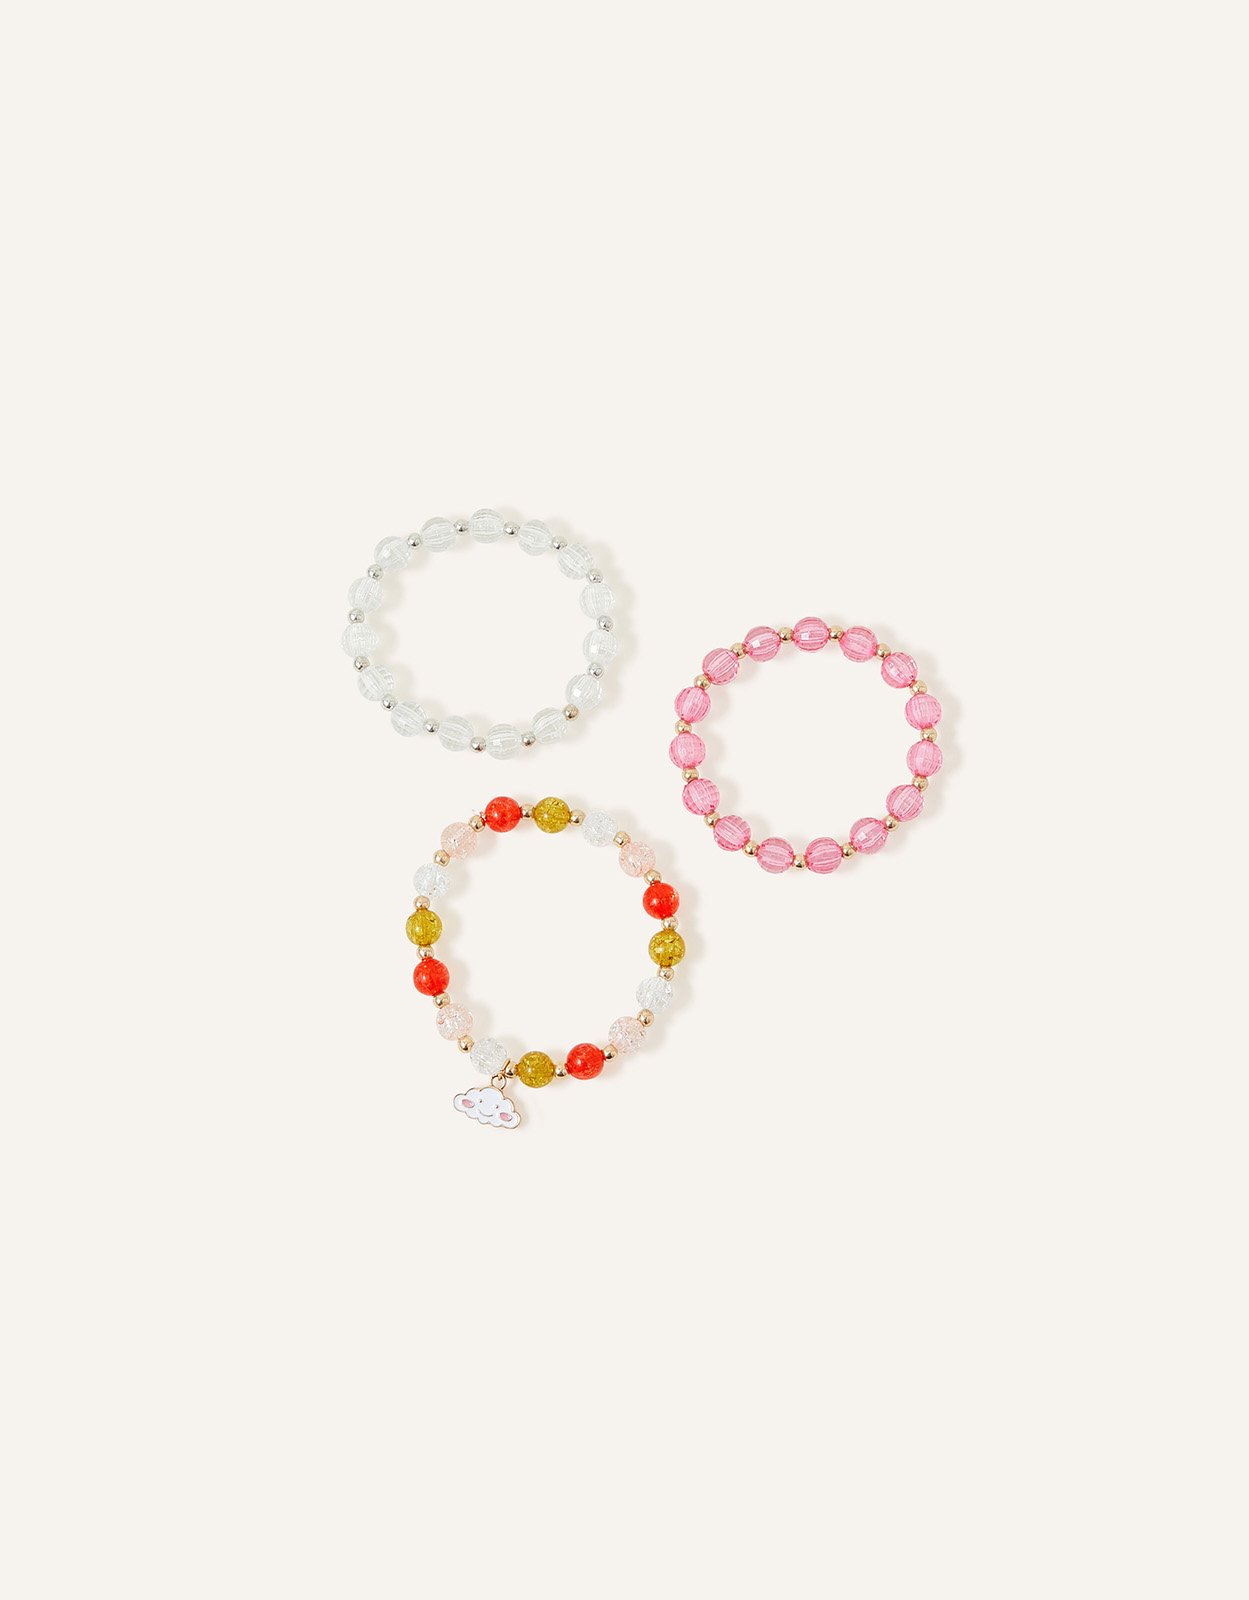 Accessorize Girl's Girls Cloud Stretch Bracelets Set of Three